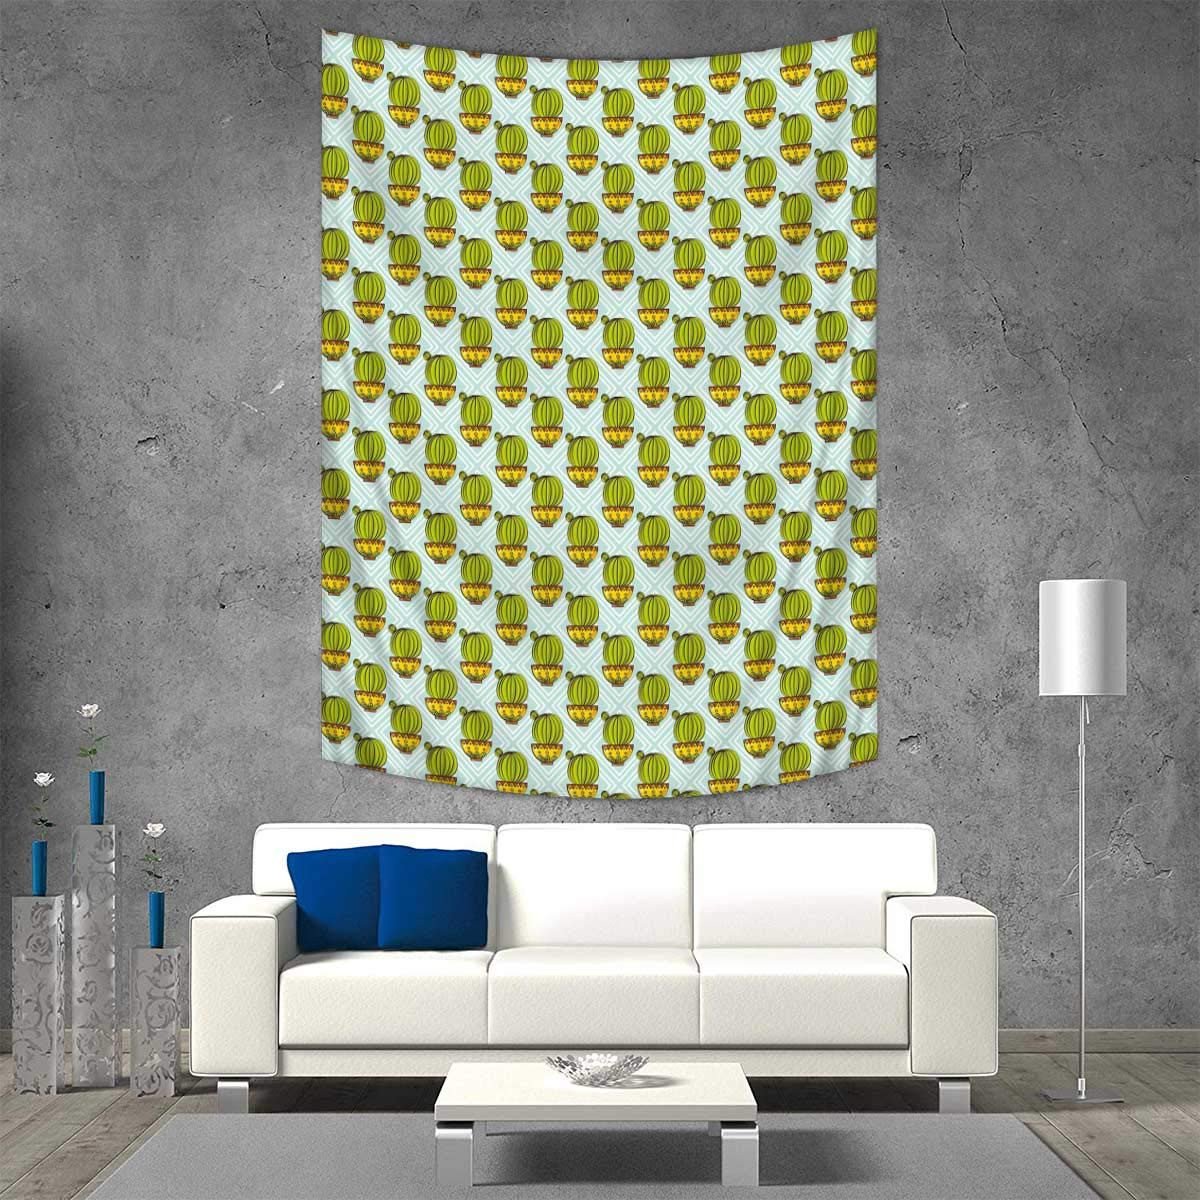 Mint Green Bedroom Decor Luxury Amazon Cactus Tapestry Wall Tapestry Diamond Pattern